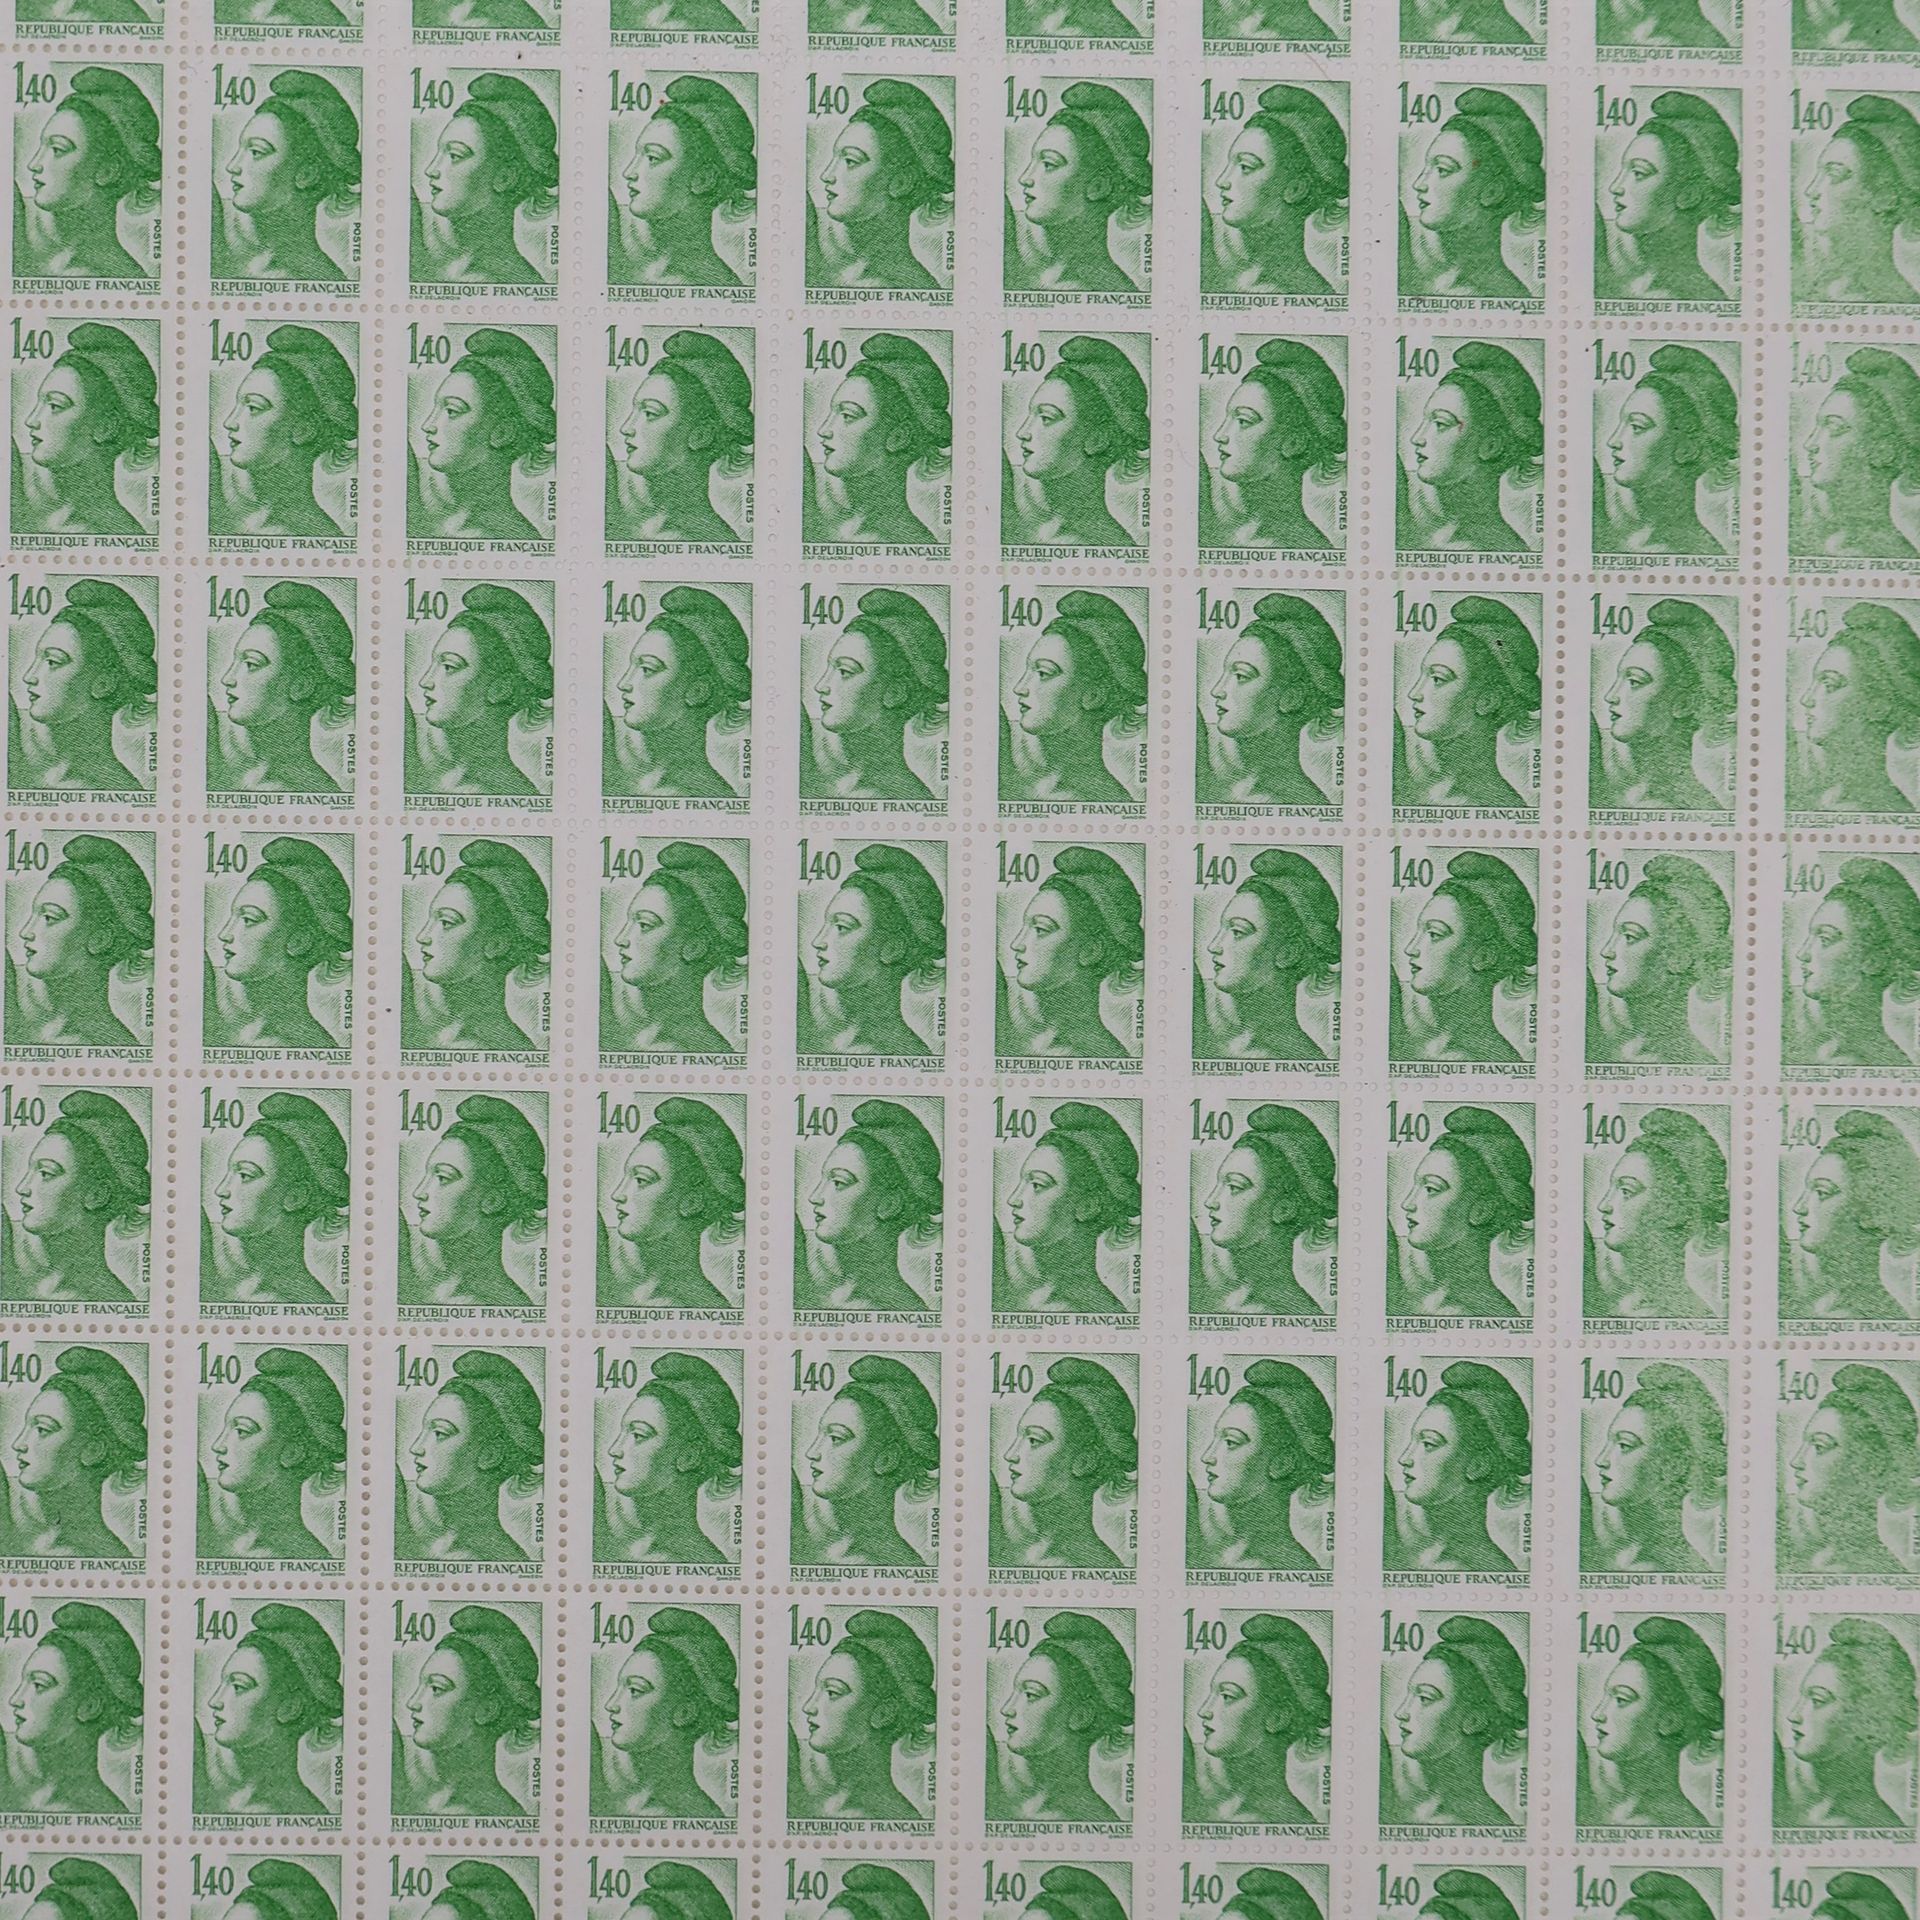 Null [法国]
Superb n° 2186 "vert liberté"，全张，11份的各种印刷，新的**，奢侈品